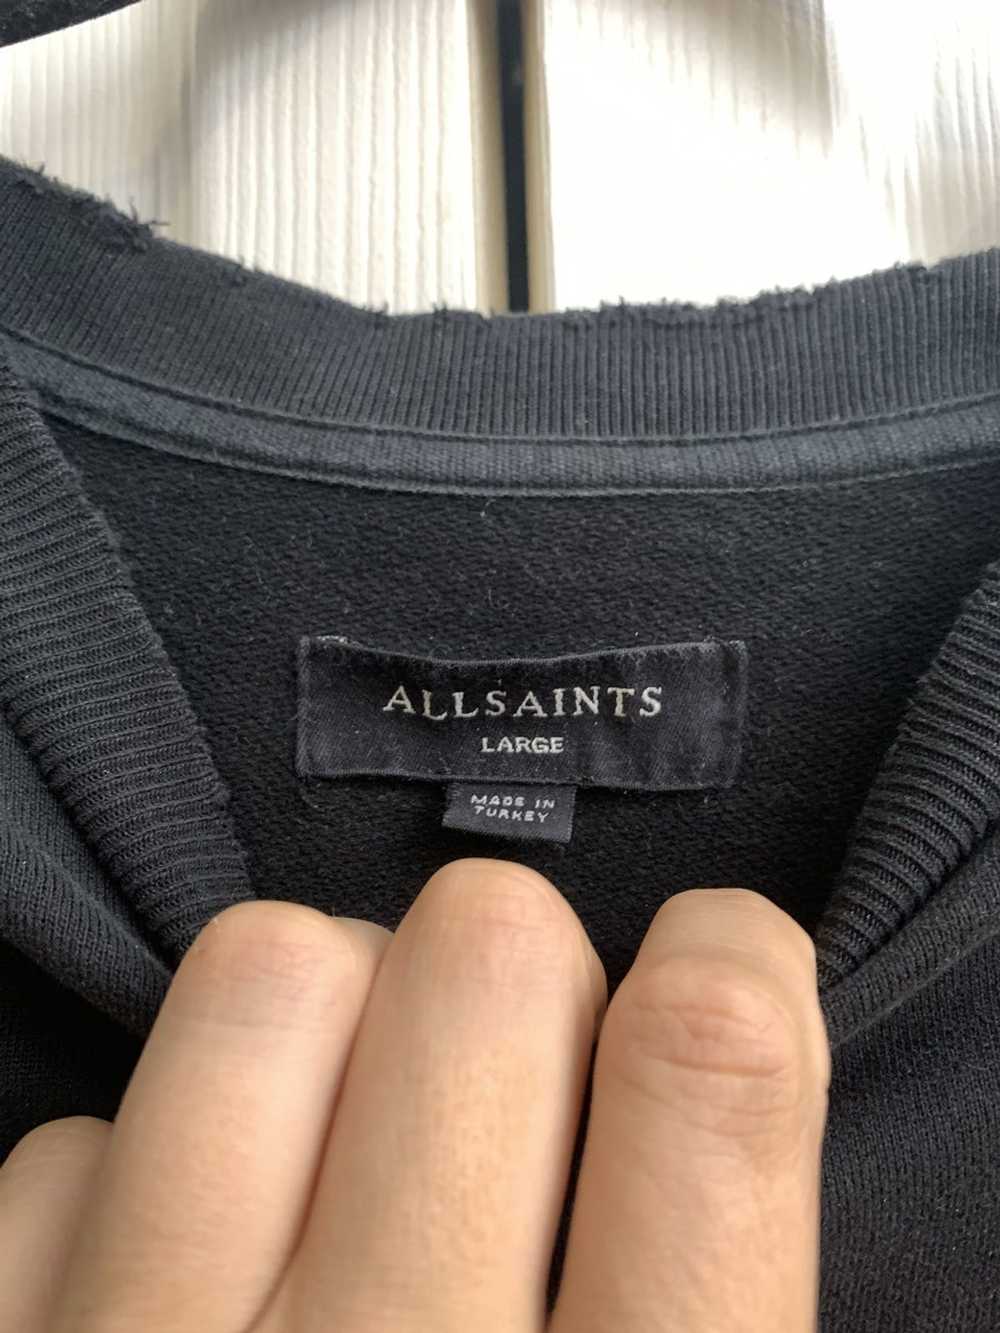 Allsaints Black AllSaints sweatshirt - image 3